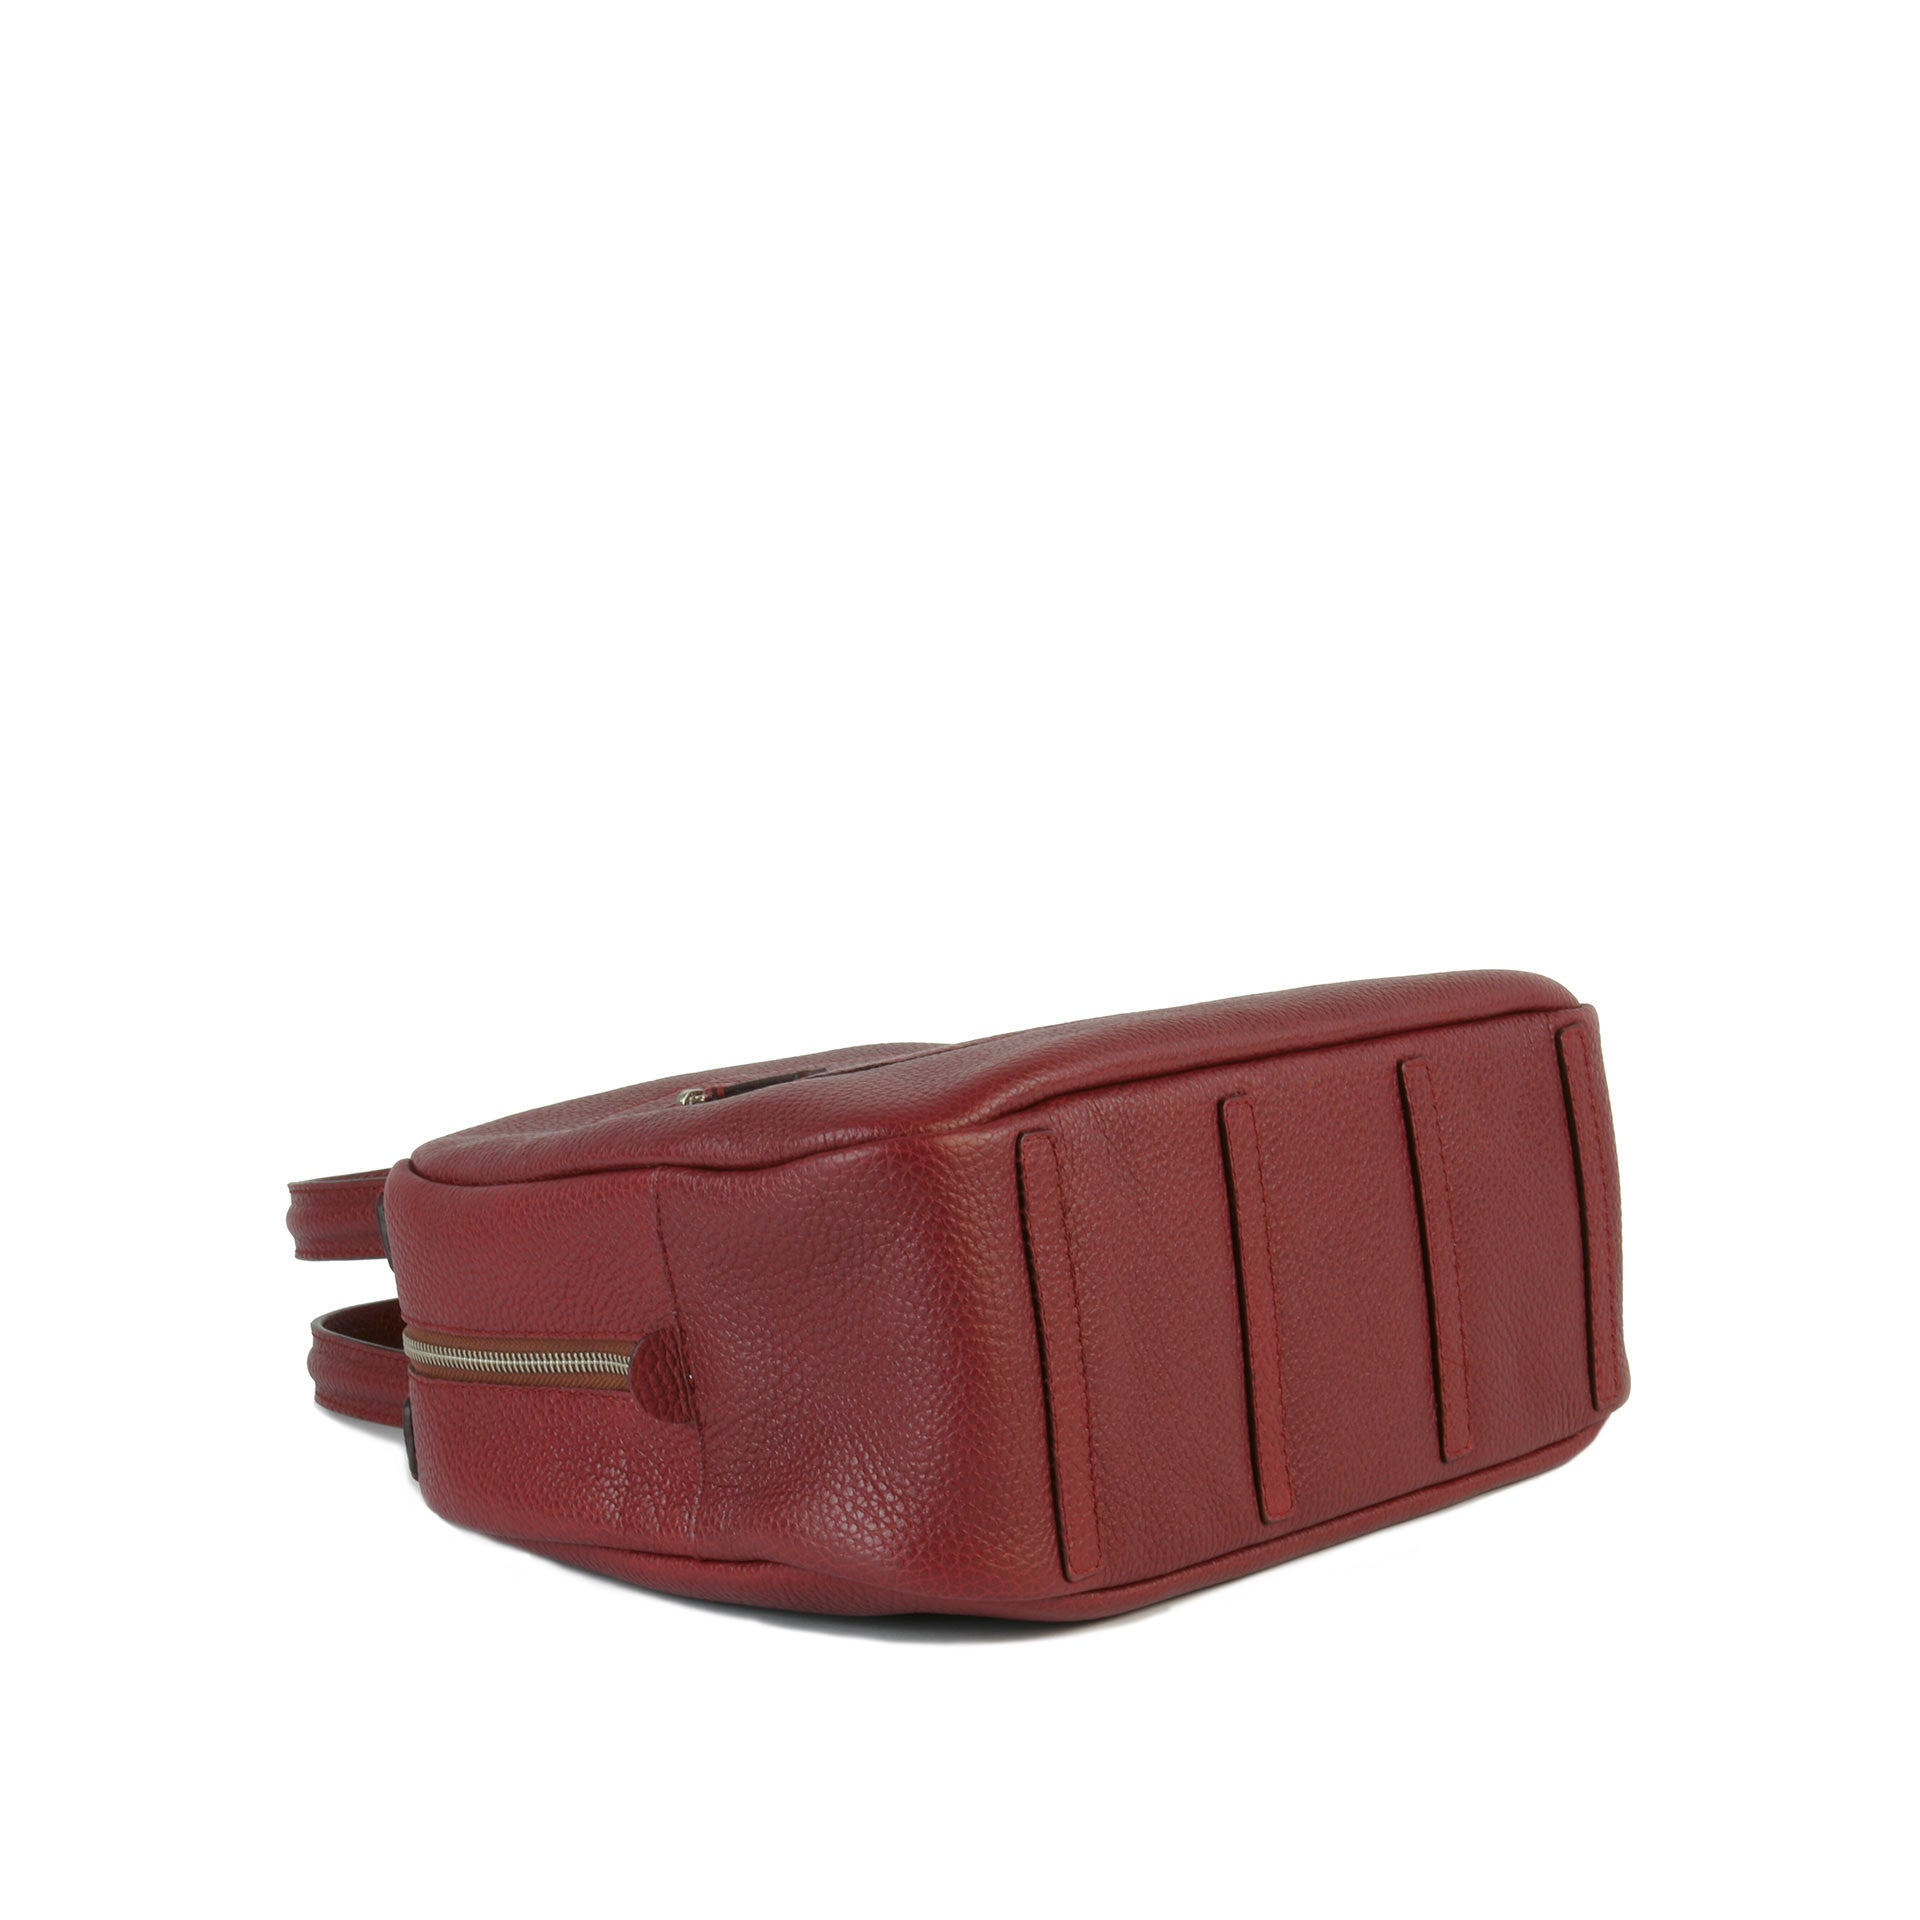 PHILINI BAGS Handbag Vintage Style red - Domi